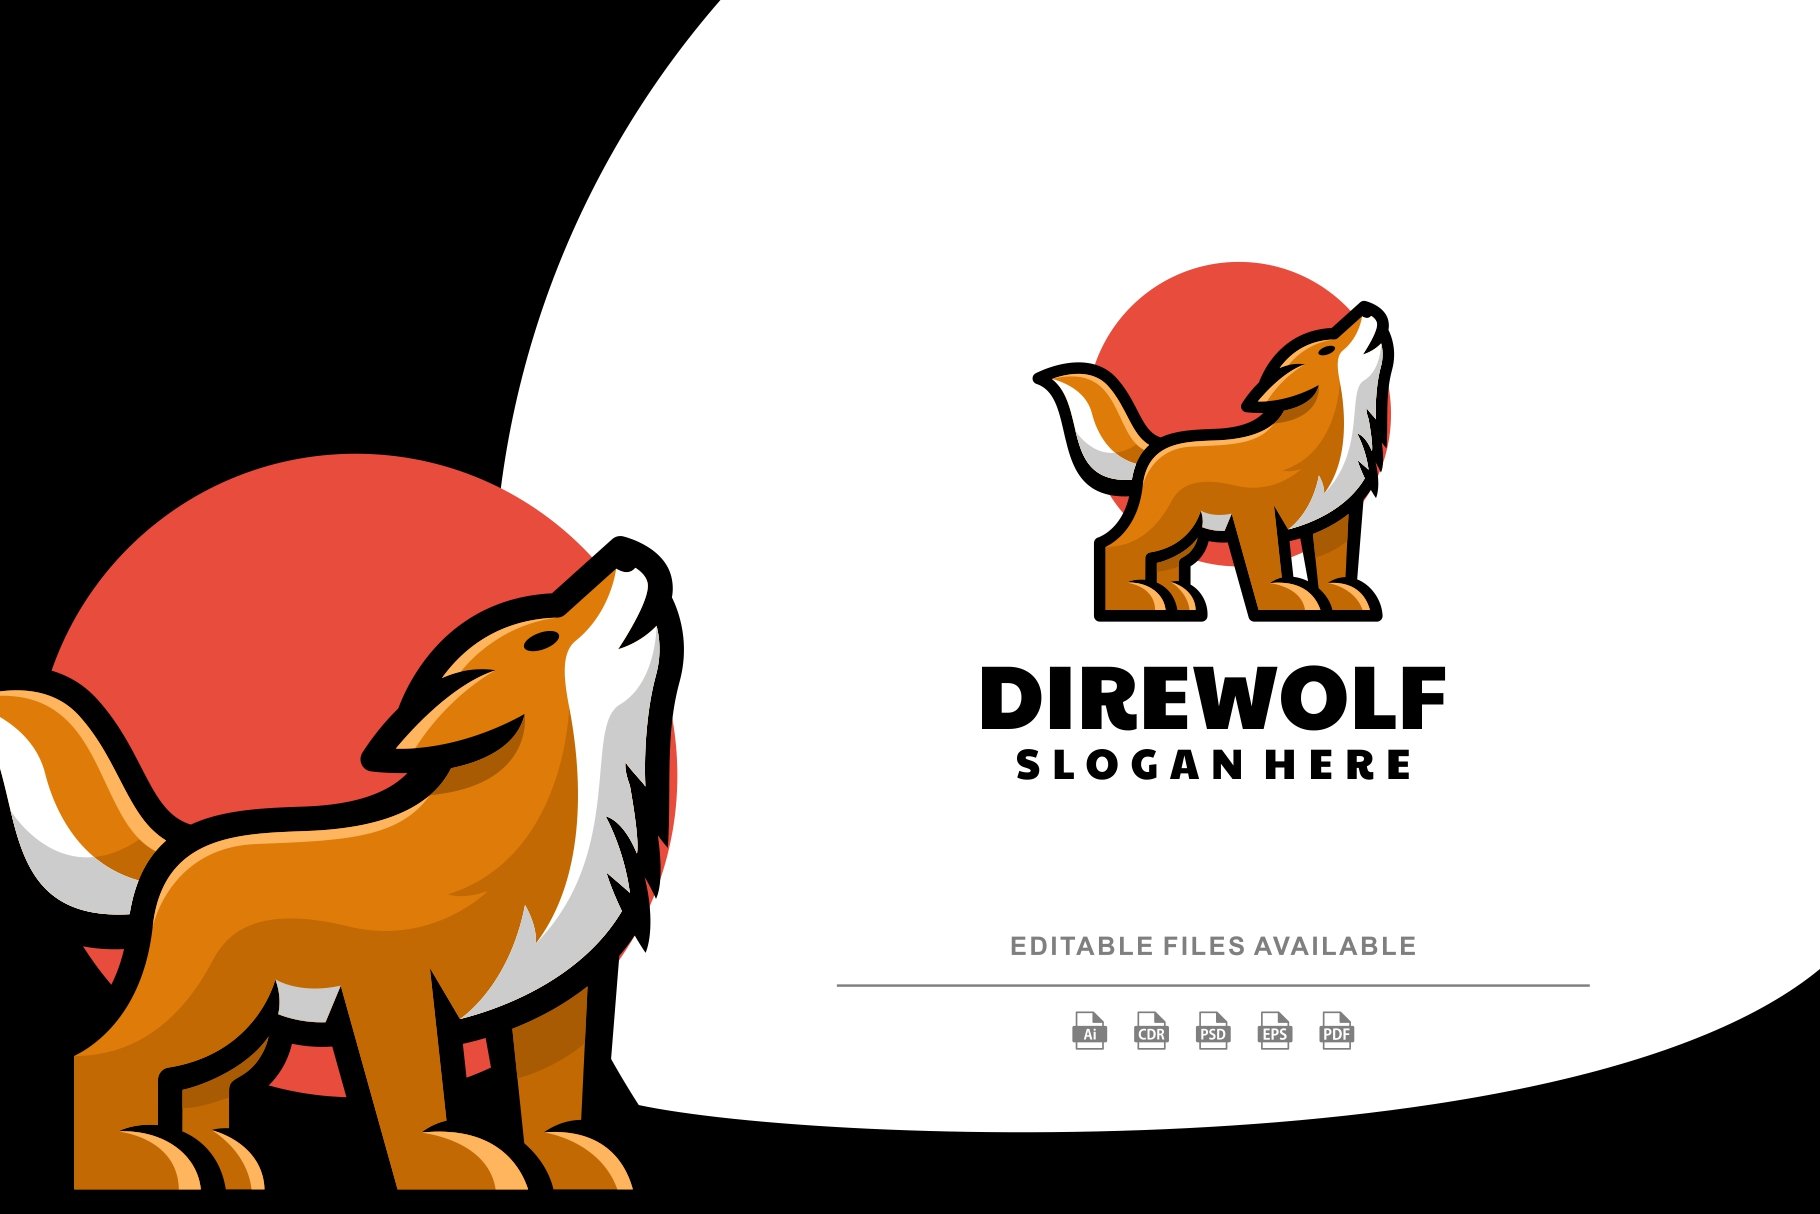 Direwolf Simple Mascot Logo cover image.